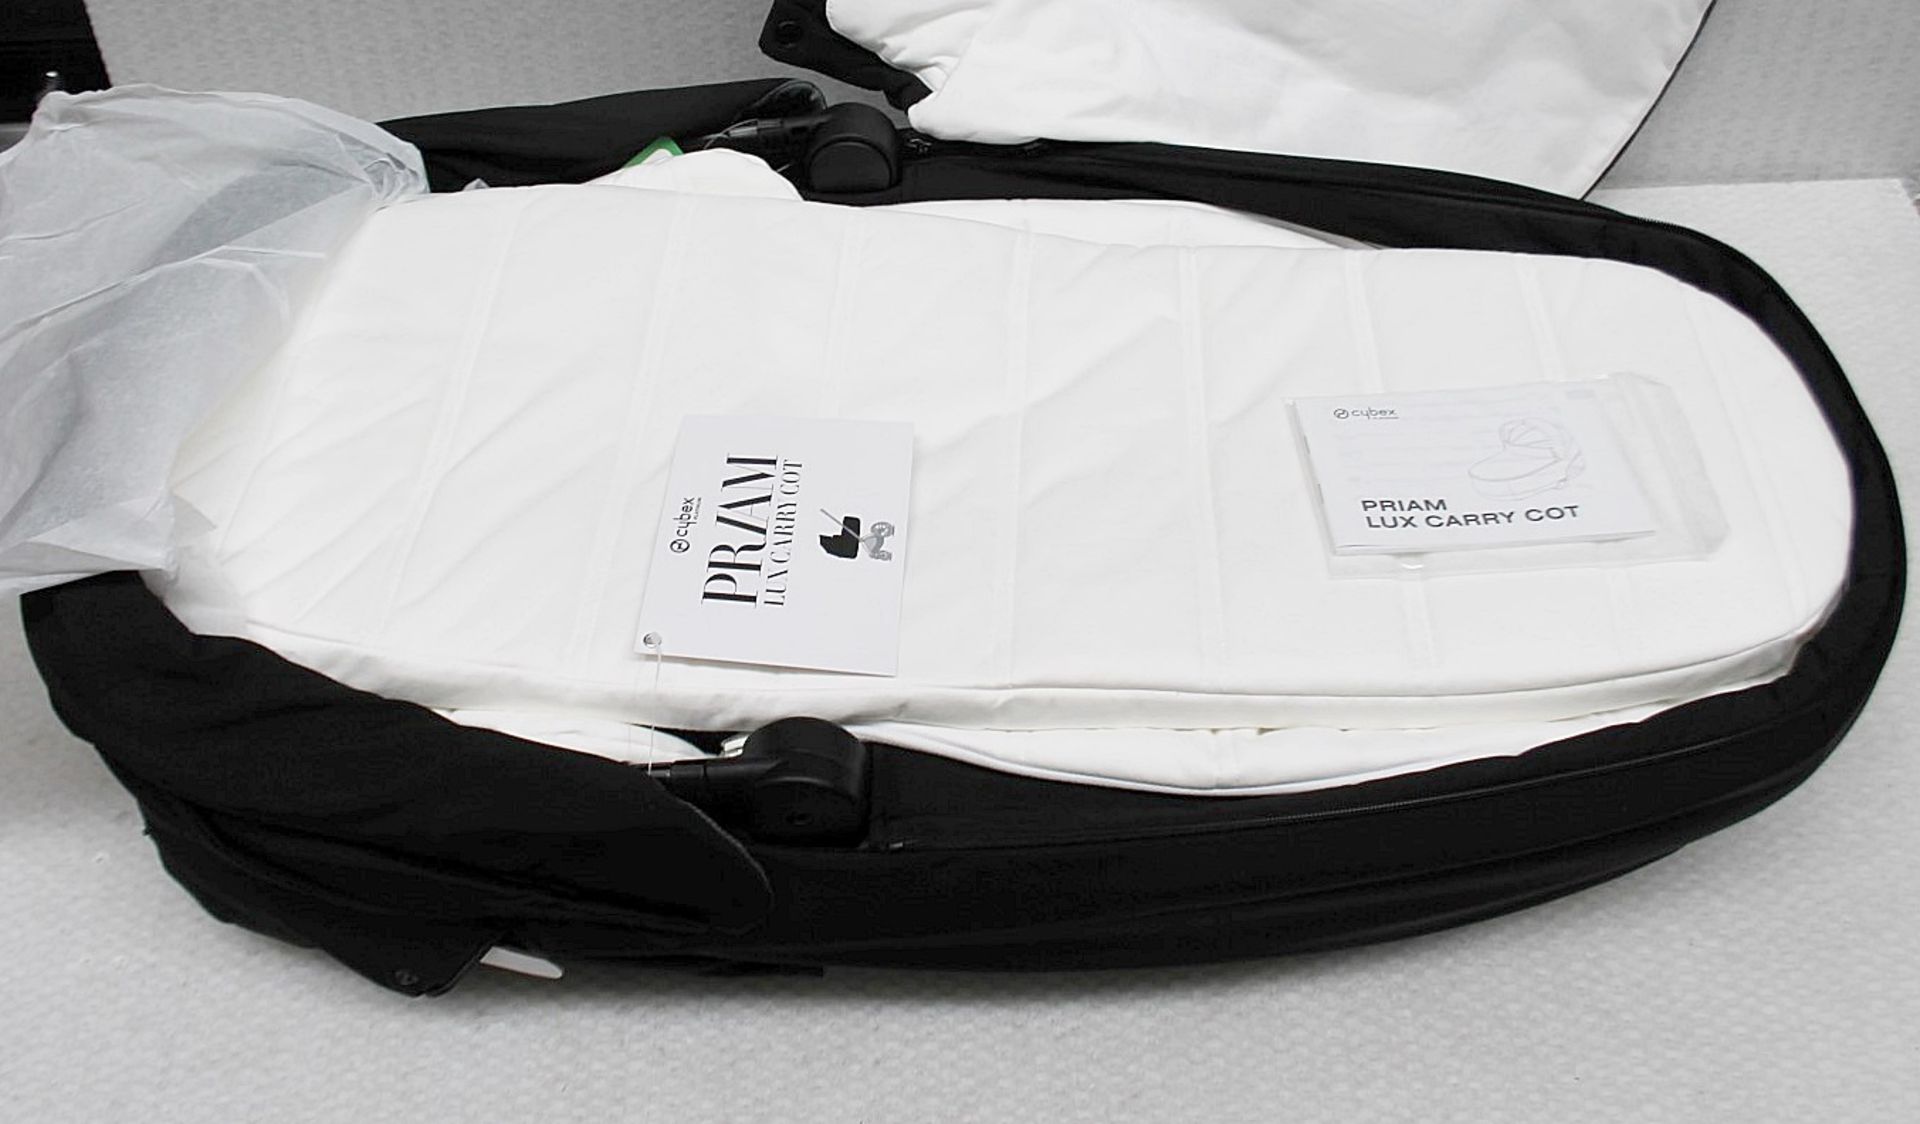 1 x CYBEX 'Priam' Luxury Carrycot In Black - Original Price £329.95 - Unused Boxed Stock - Image 3 of 19